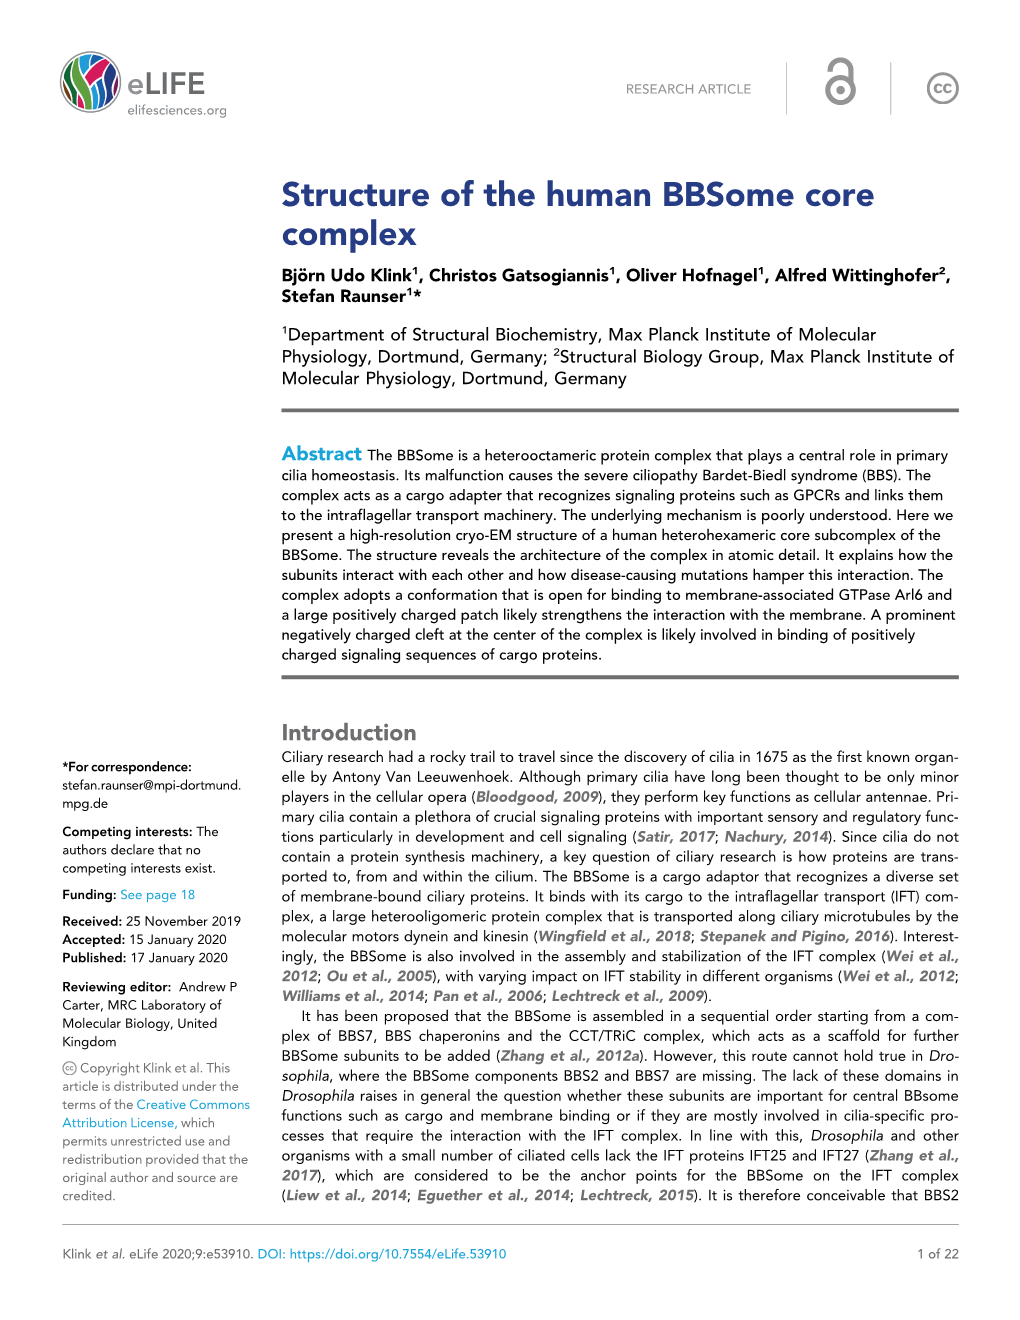 Structure of the Human Bbsome Core Complex Bjo¨ Rn Udo Klink1, Christos Gatsogiannis1, Oliver Hofnagel1, Alfred Wittinghofer2, Stefan Raunser1*